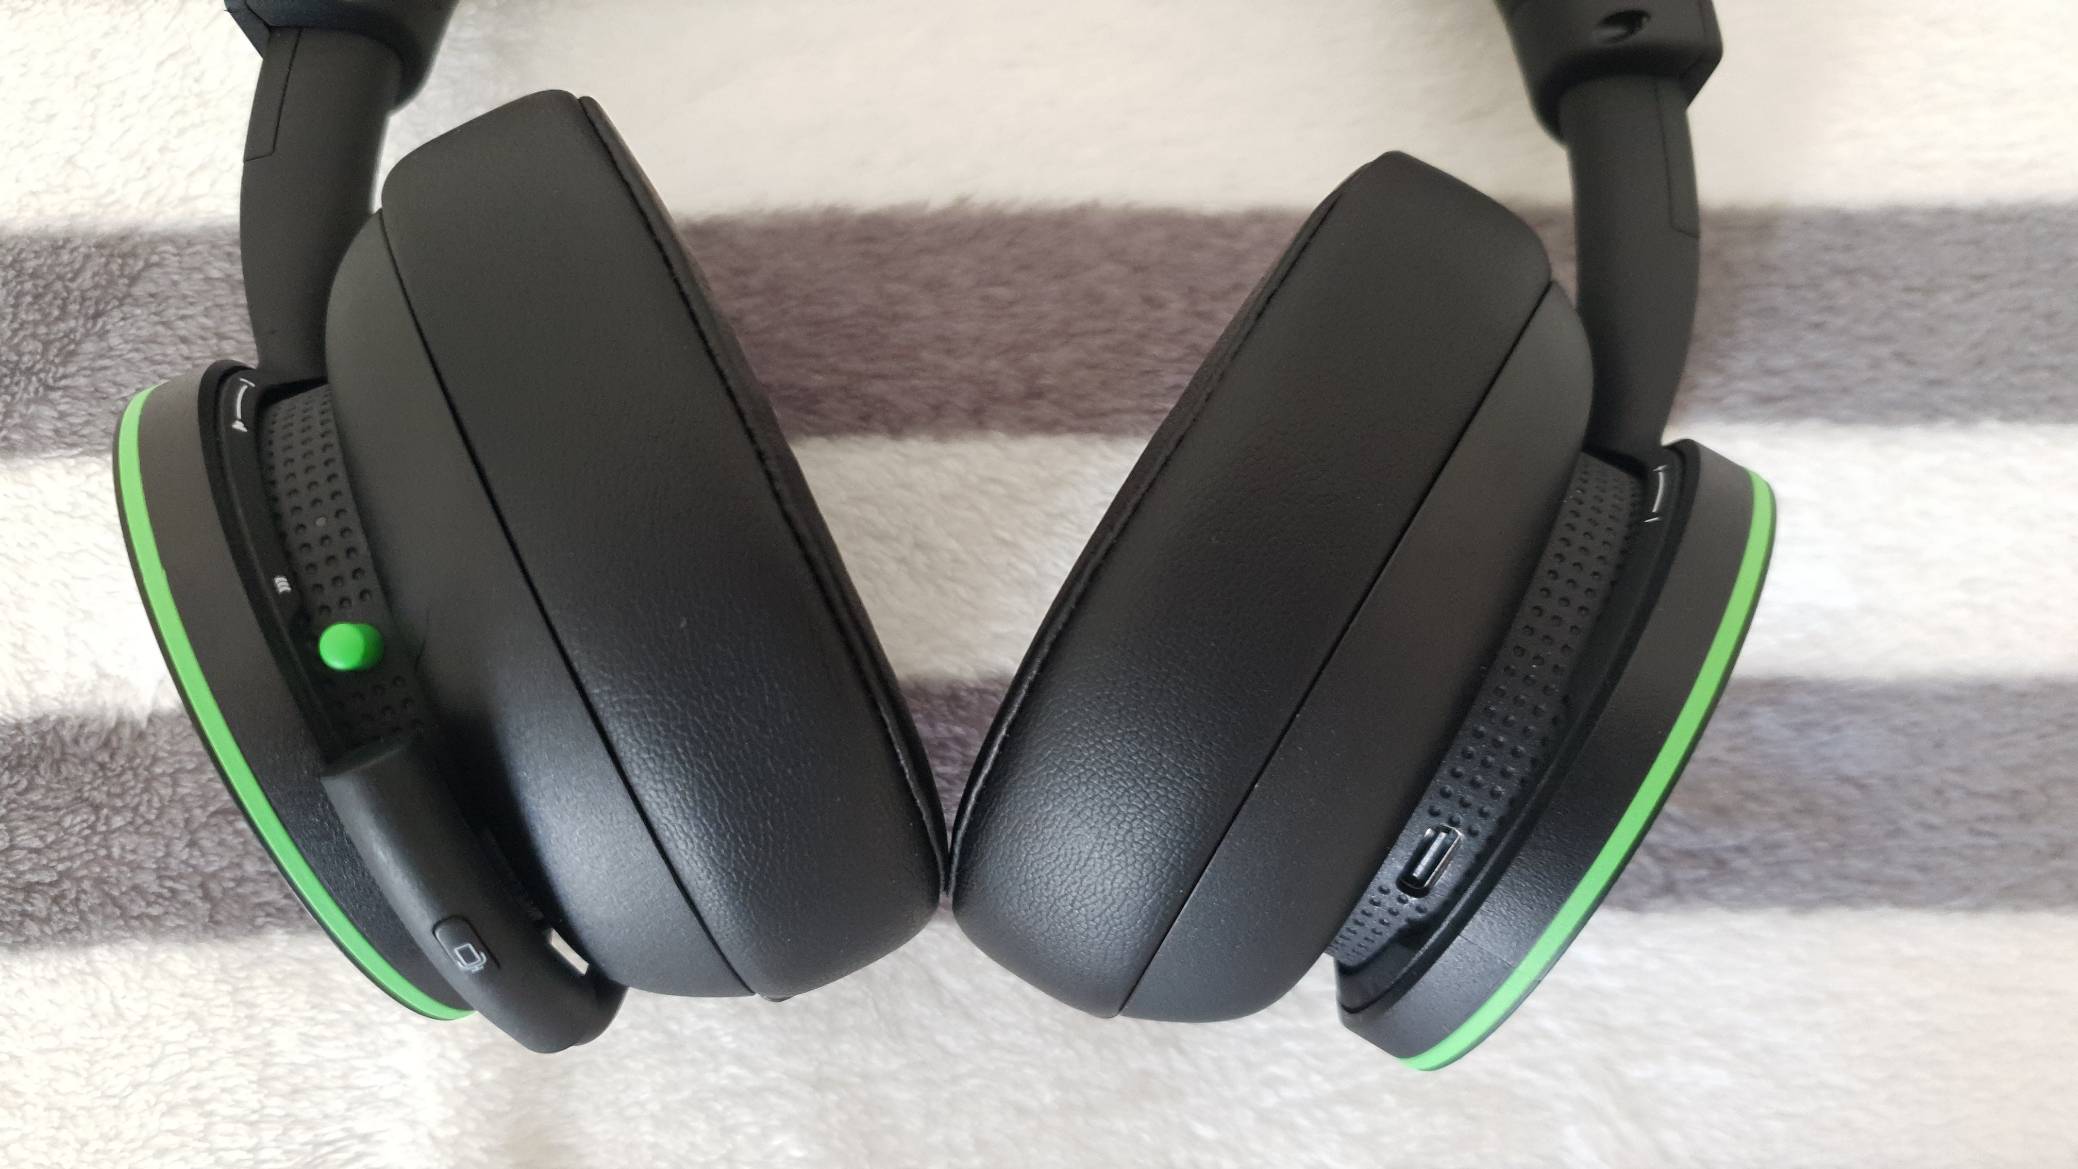 Xbox Wireless Headset controls